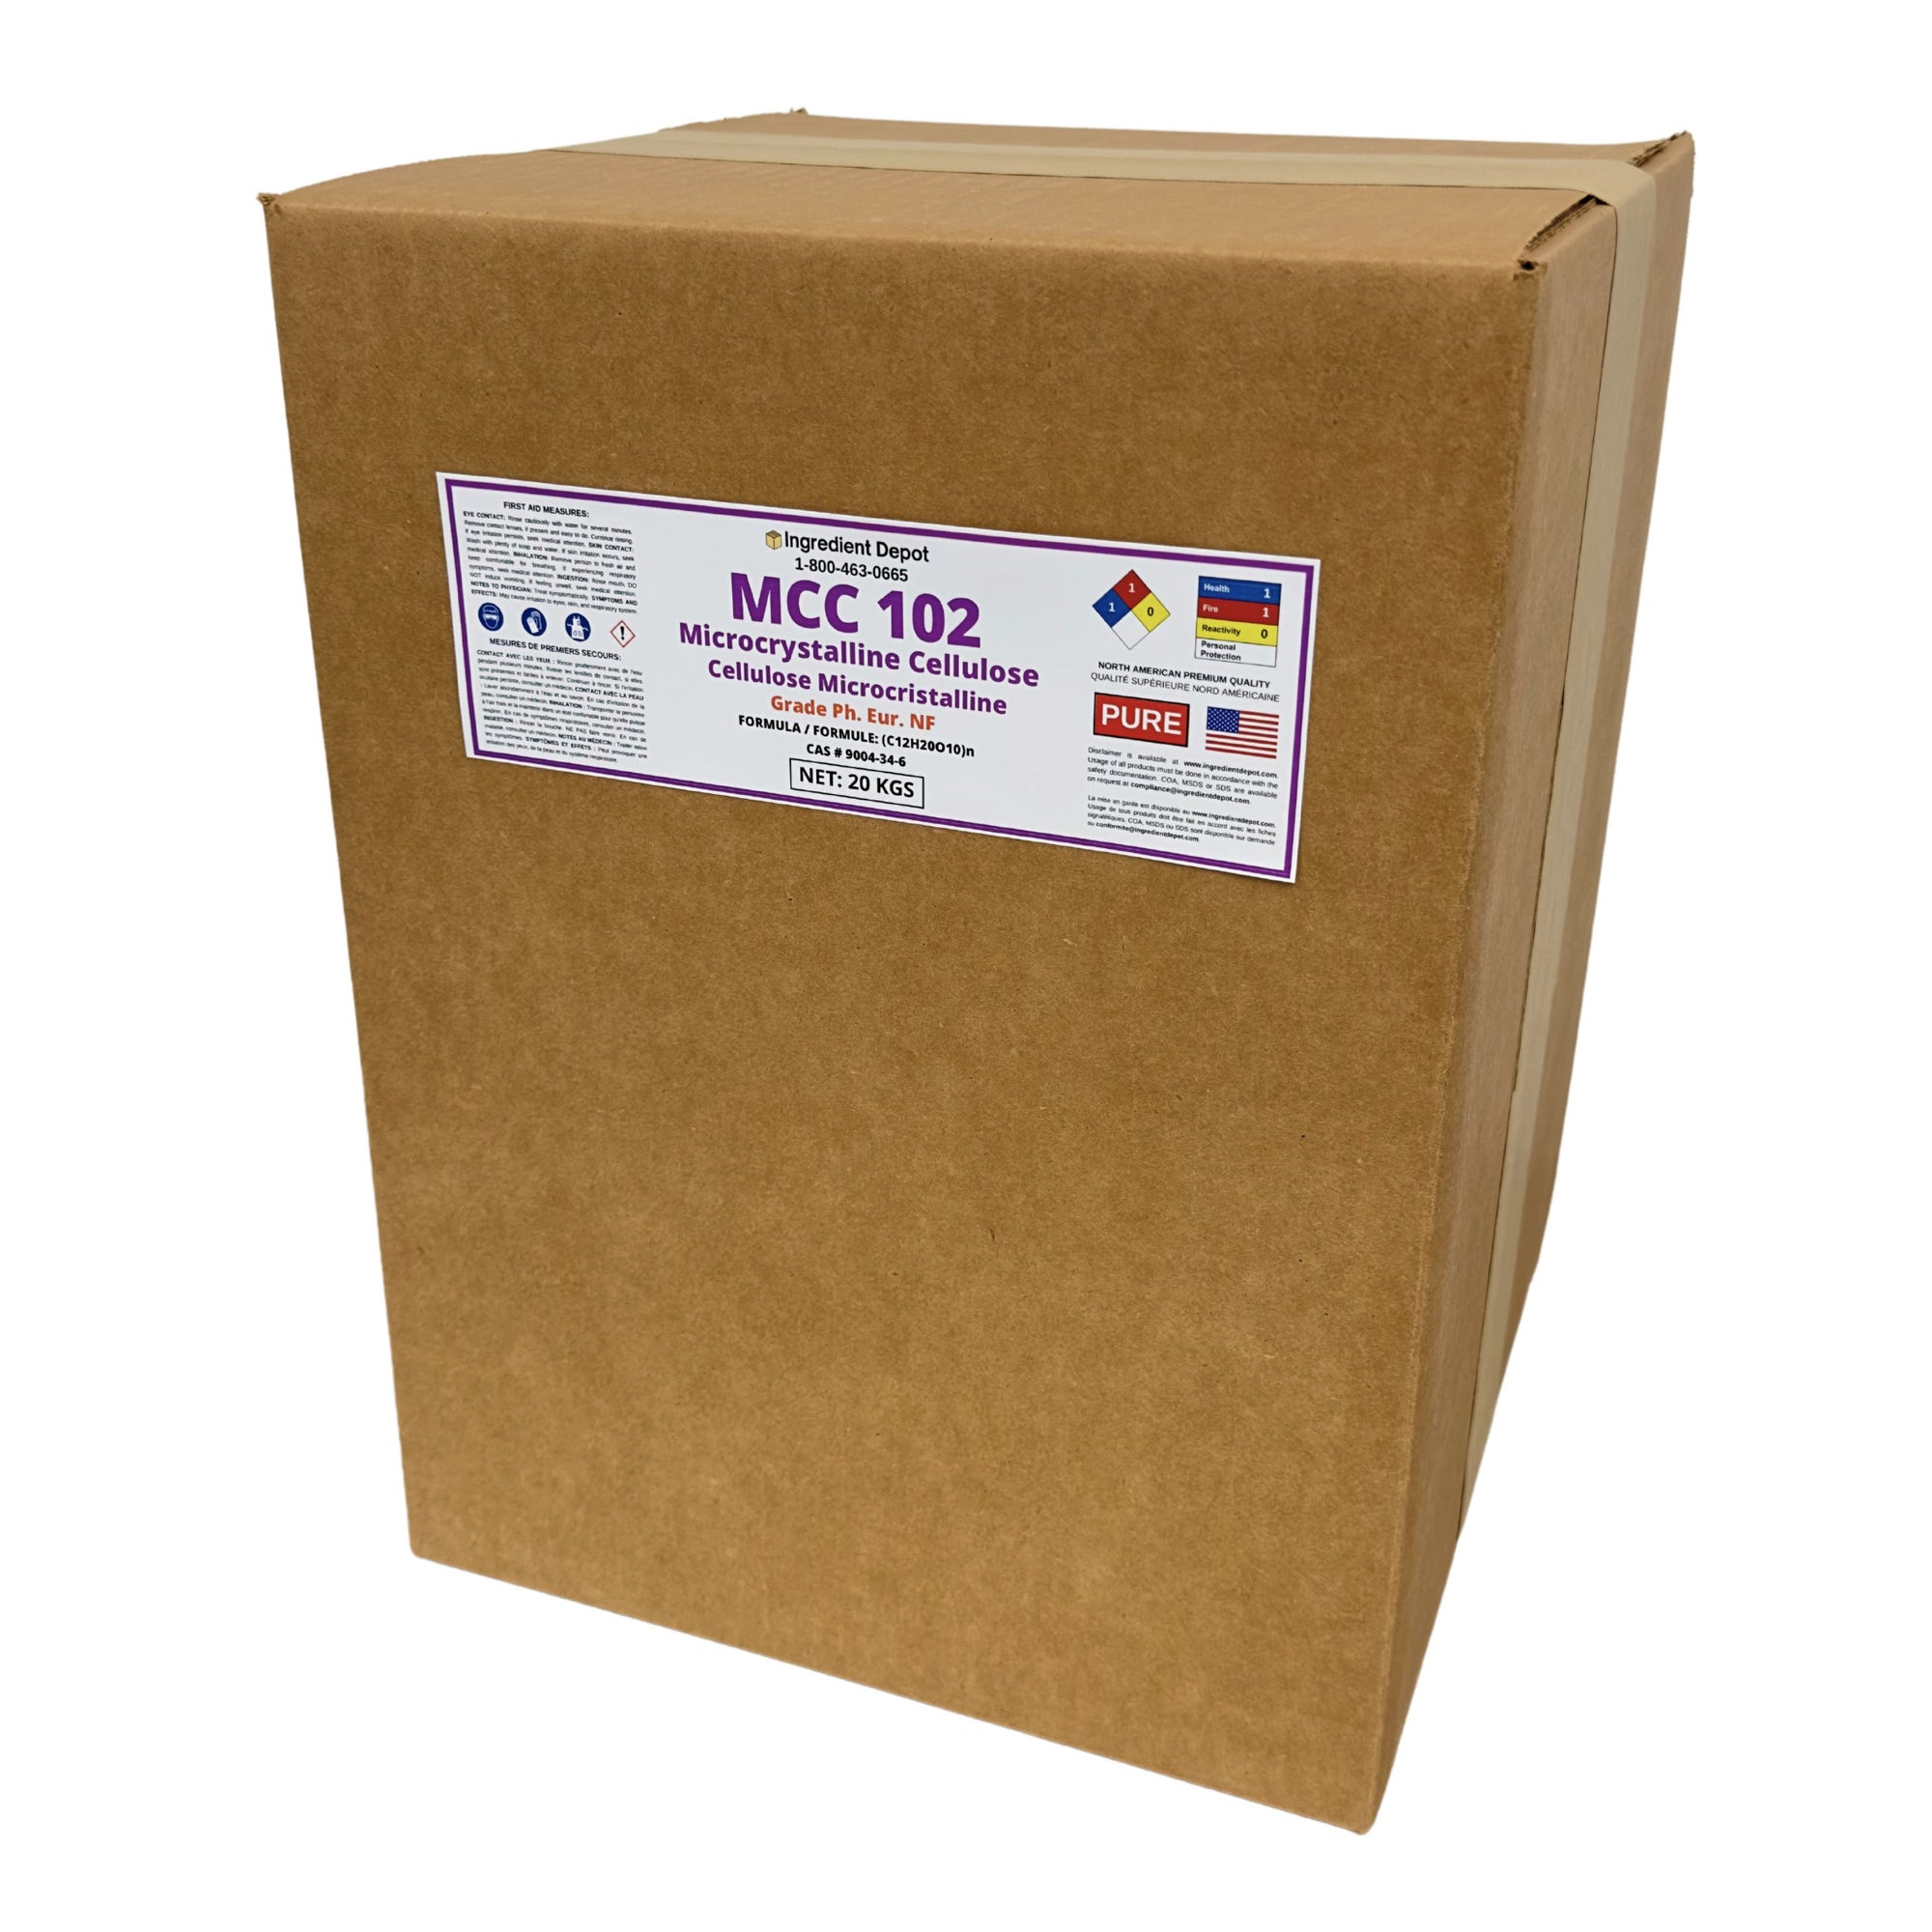 MCC 102 Microcrystalline Cellulose 20 kgs from North America